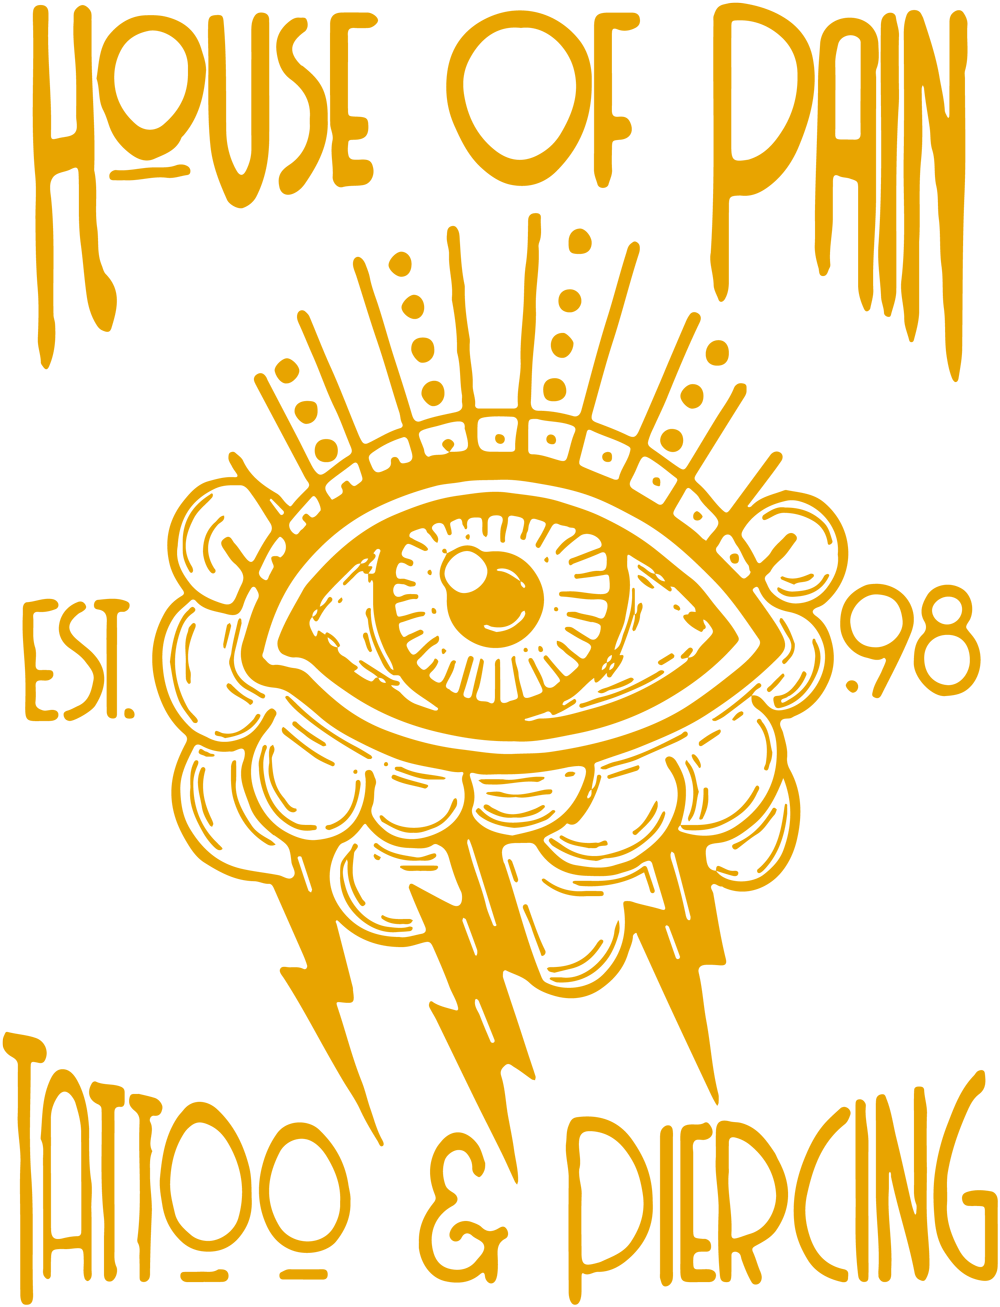 House of Pain Logo